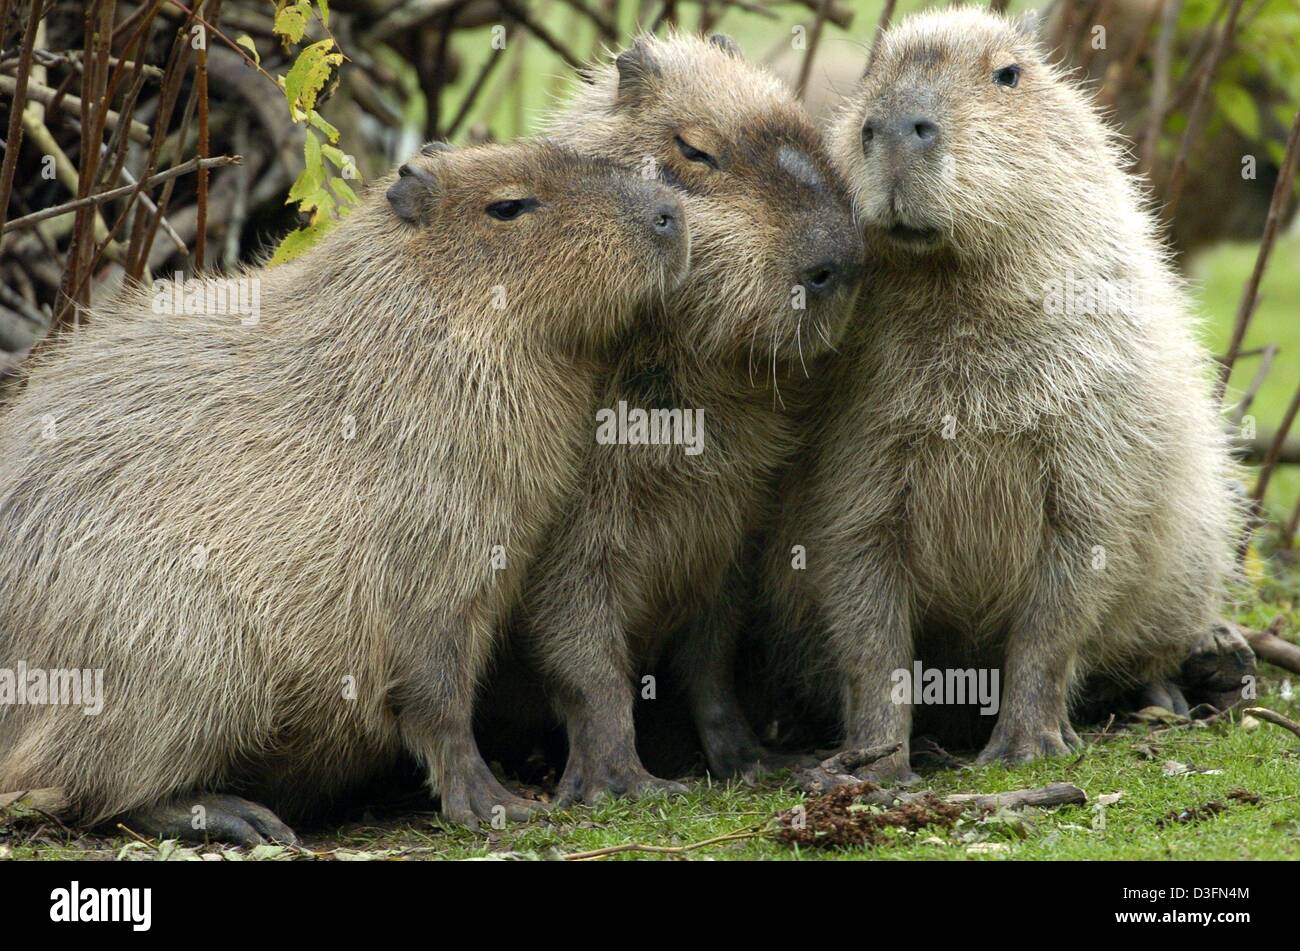 New male capybara settles in at Hellabrunn Zoo - Tierpark Hellabrunn